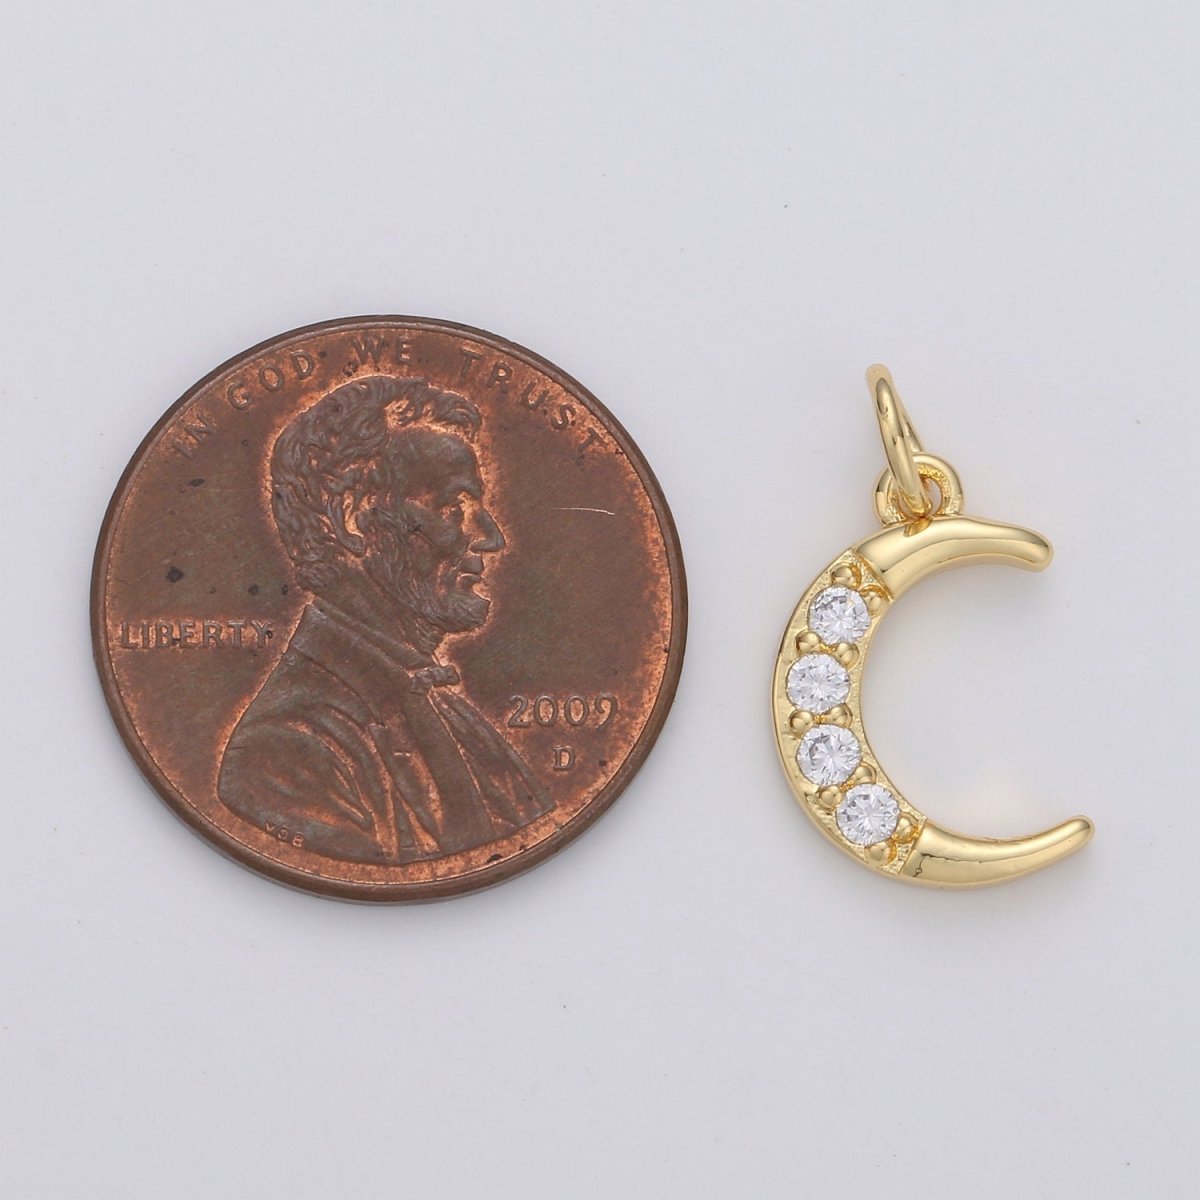 Dainty Crescent Moon Charm Pendant- Micro Pave Silver, Gold Filled Half moon charm pendant, Crescent Moon Pendant Celestial Jewelry D-182 D-183 - DLUXCA